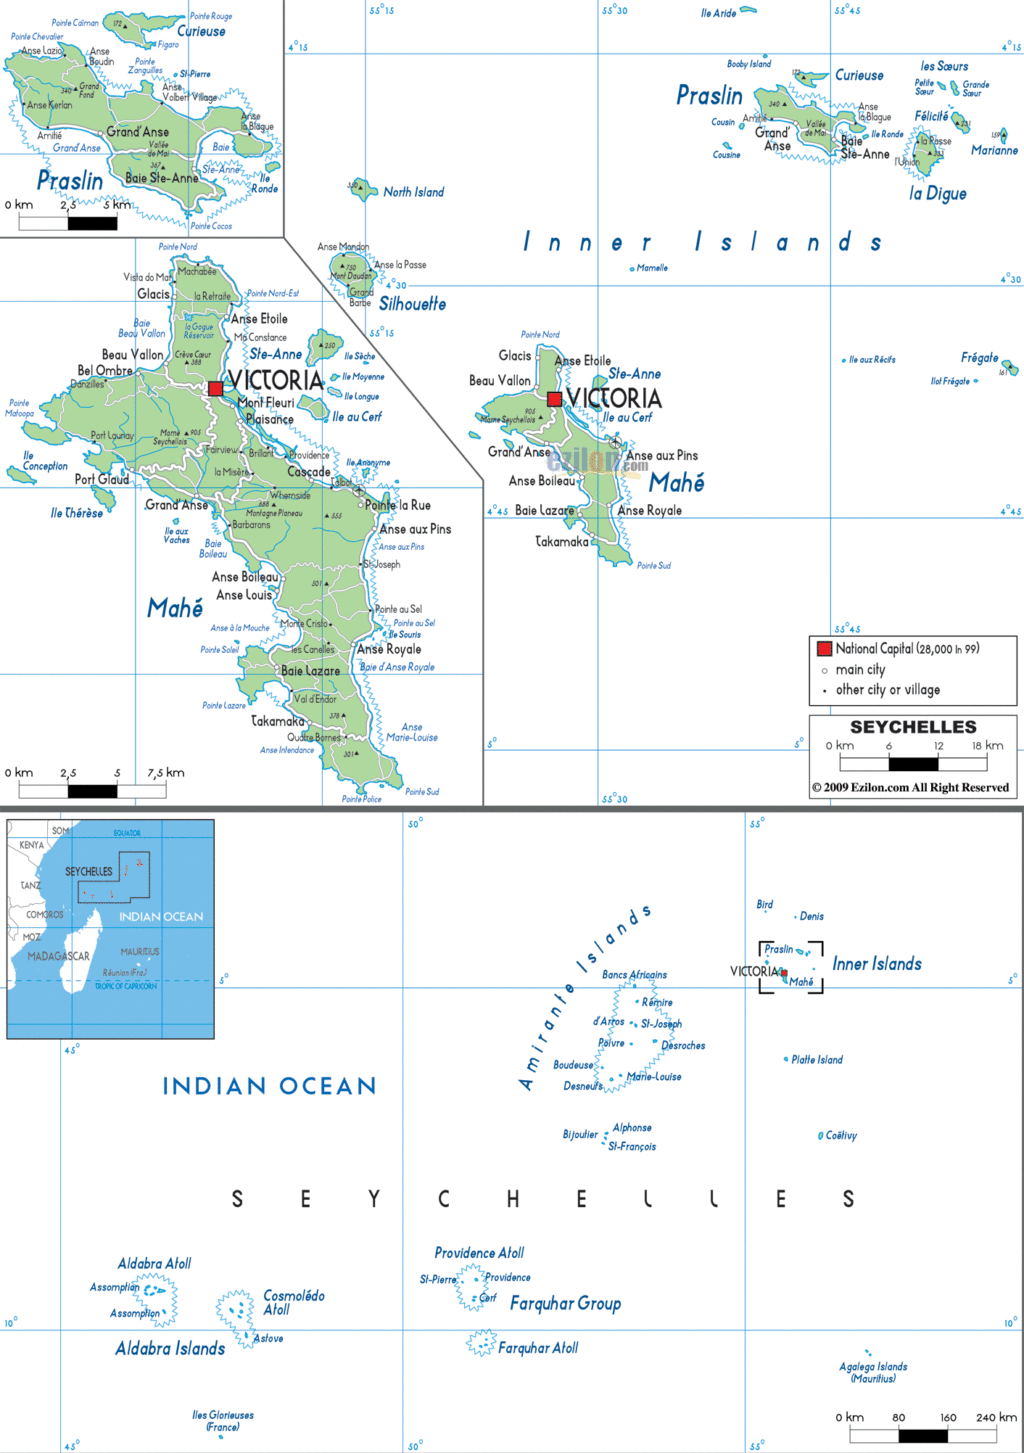 Seychelles political map.